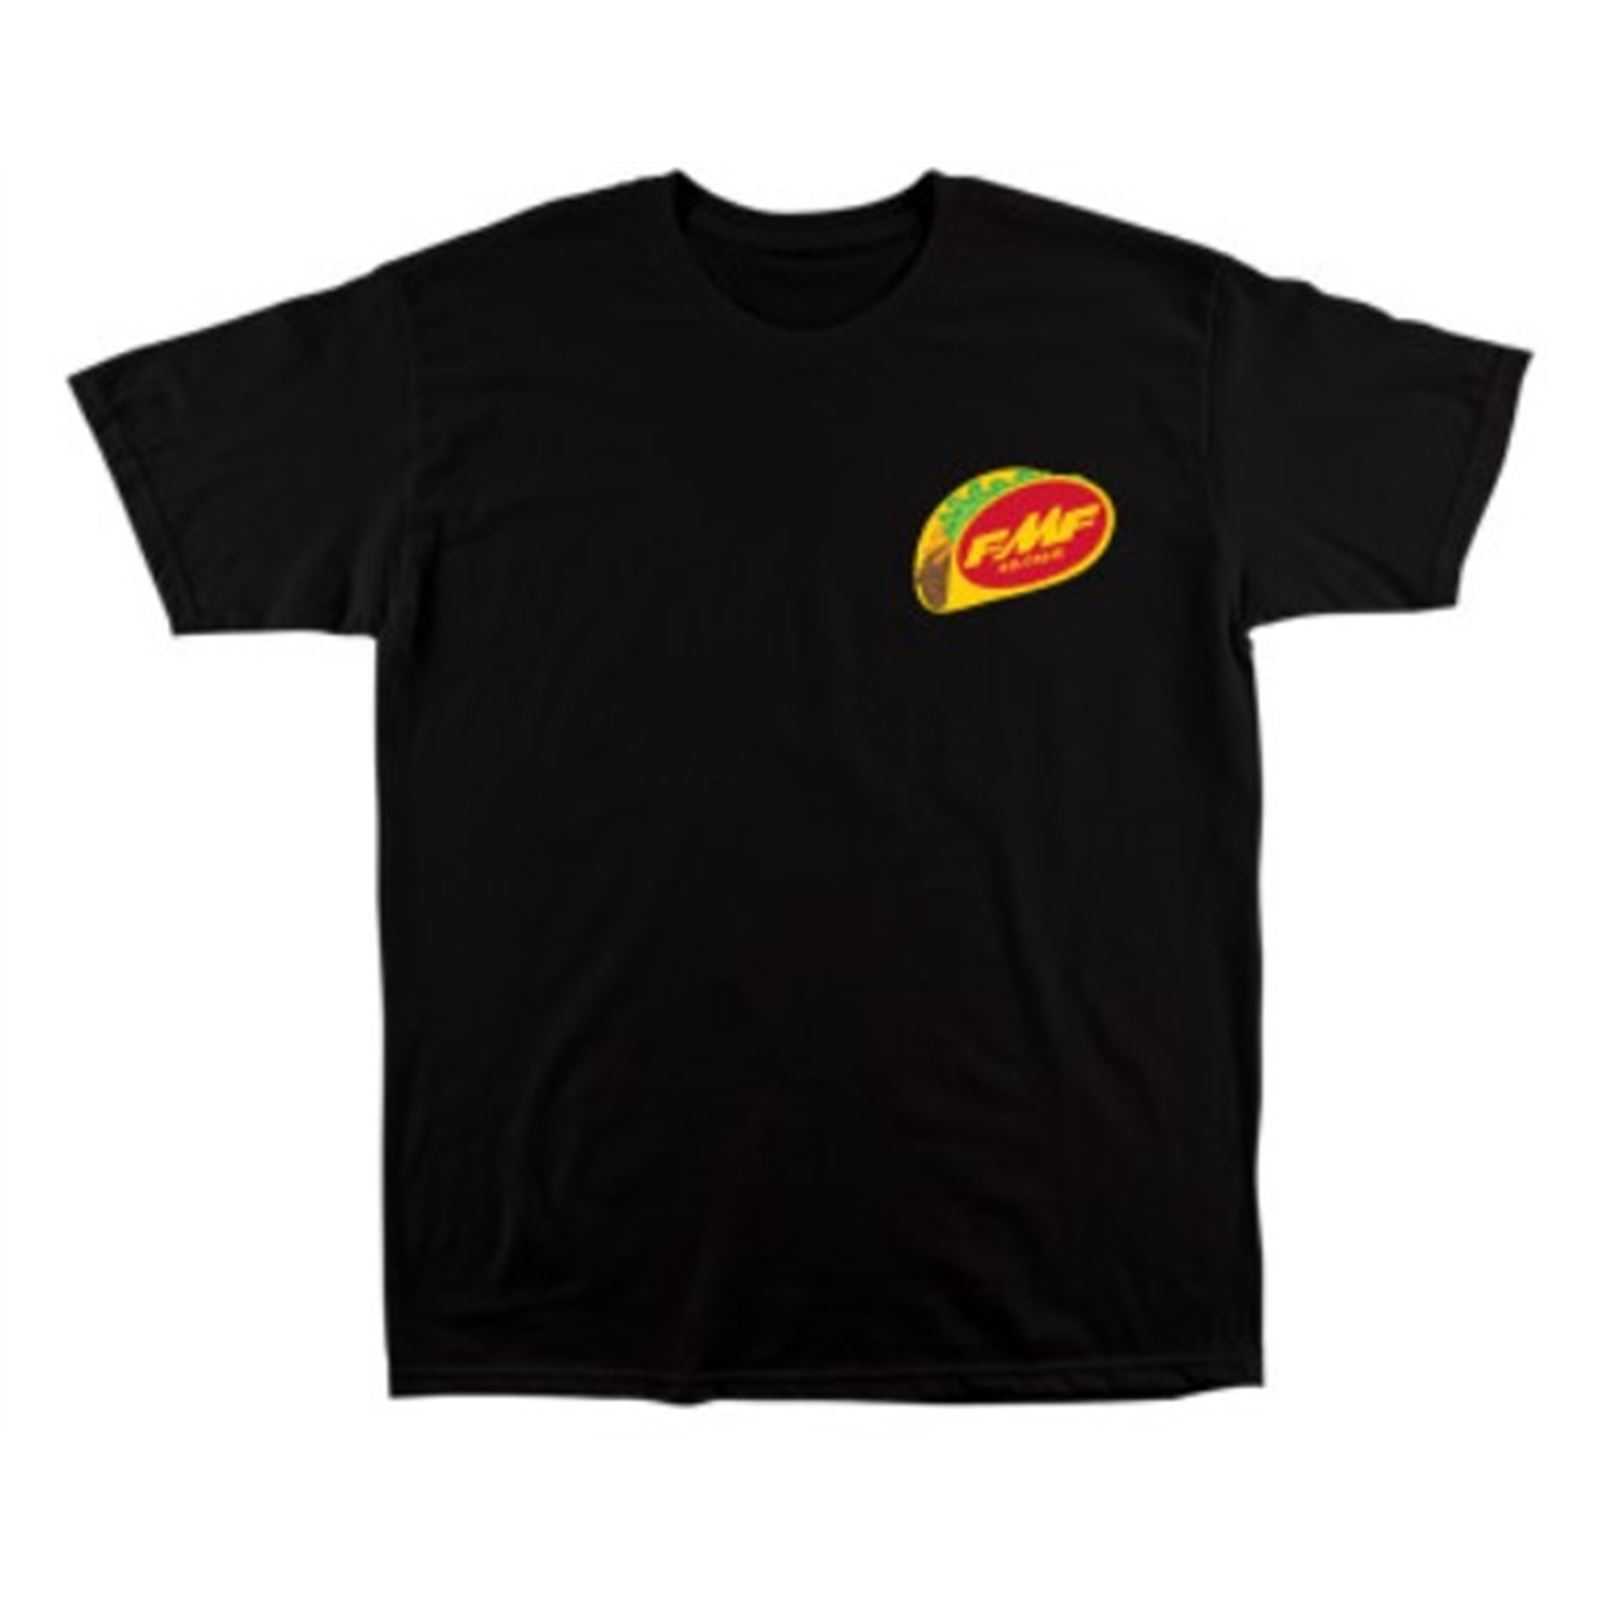 FMF Racing Taco Tuesday T-Shirt - Black - Large